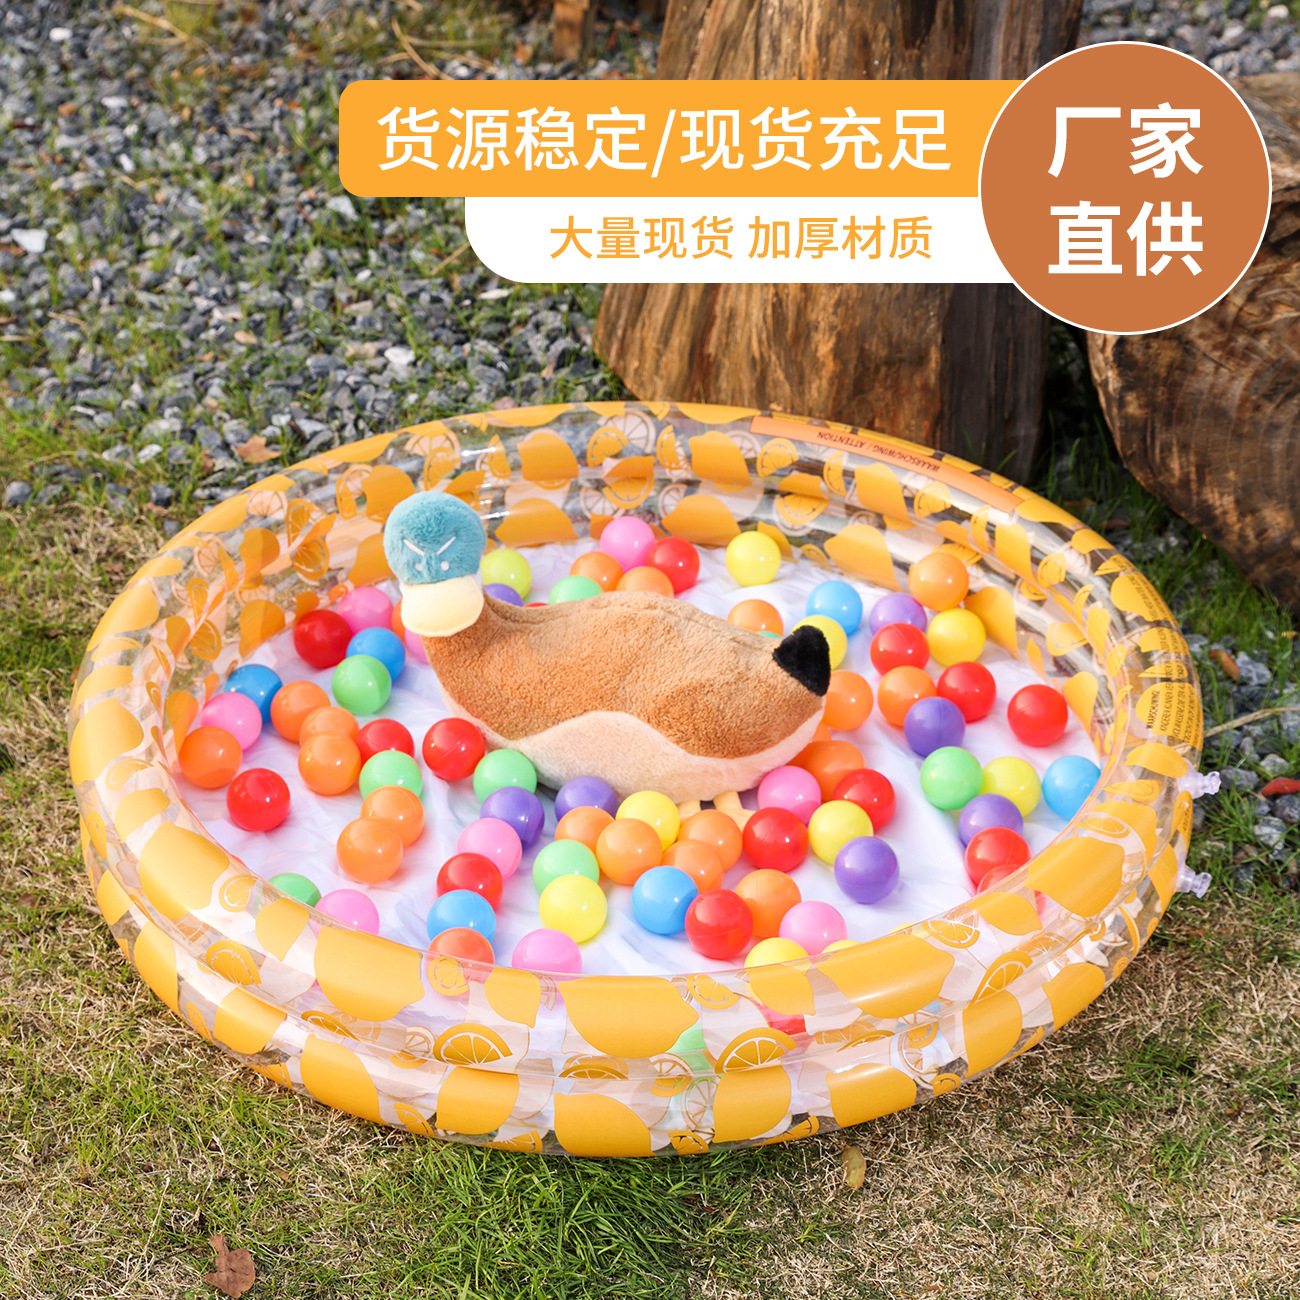 ins新款橙色双环充气海洋球池 小孩波波池 宝宝室内游戏池嬉水池